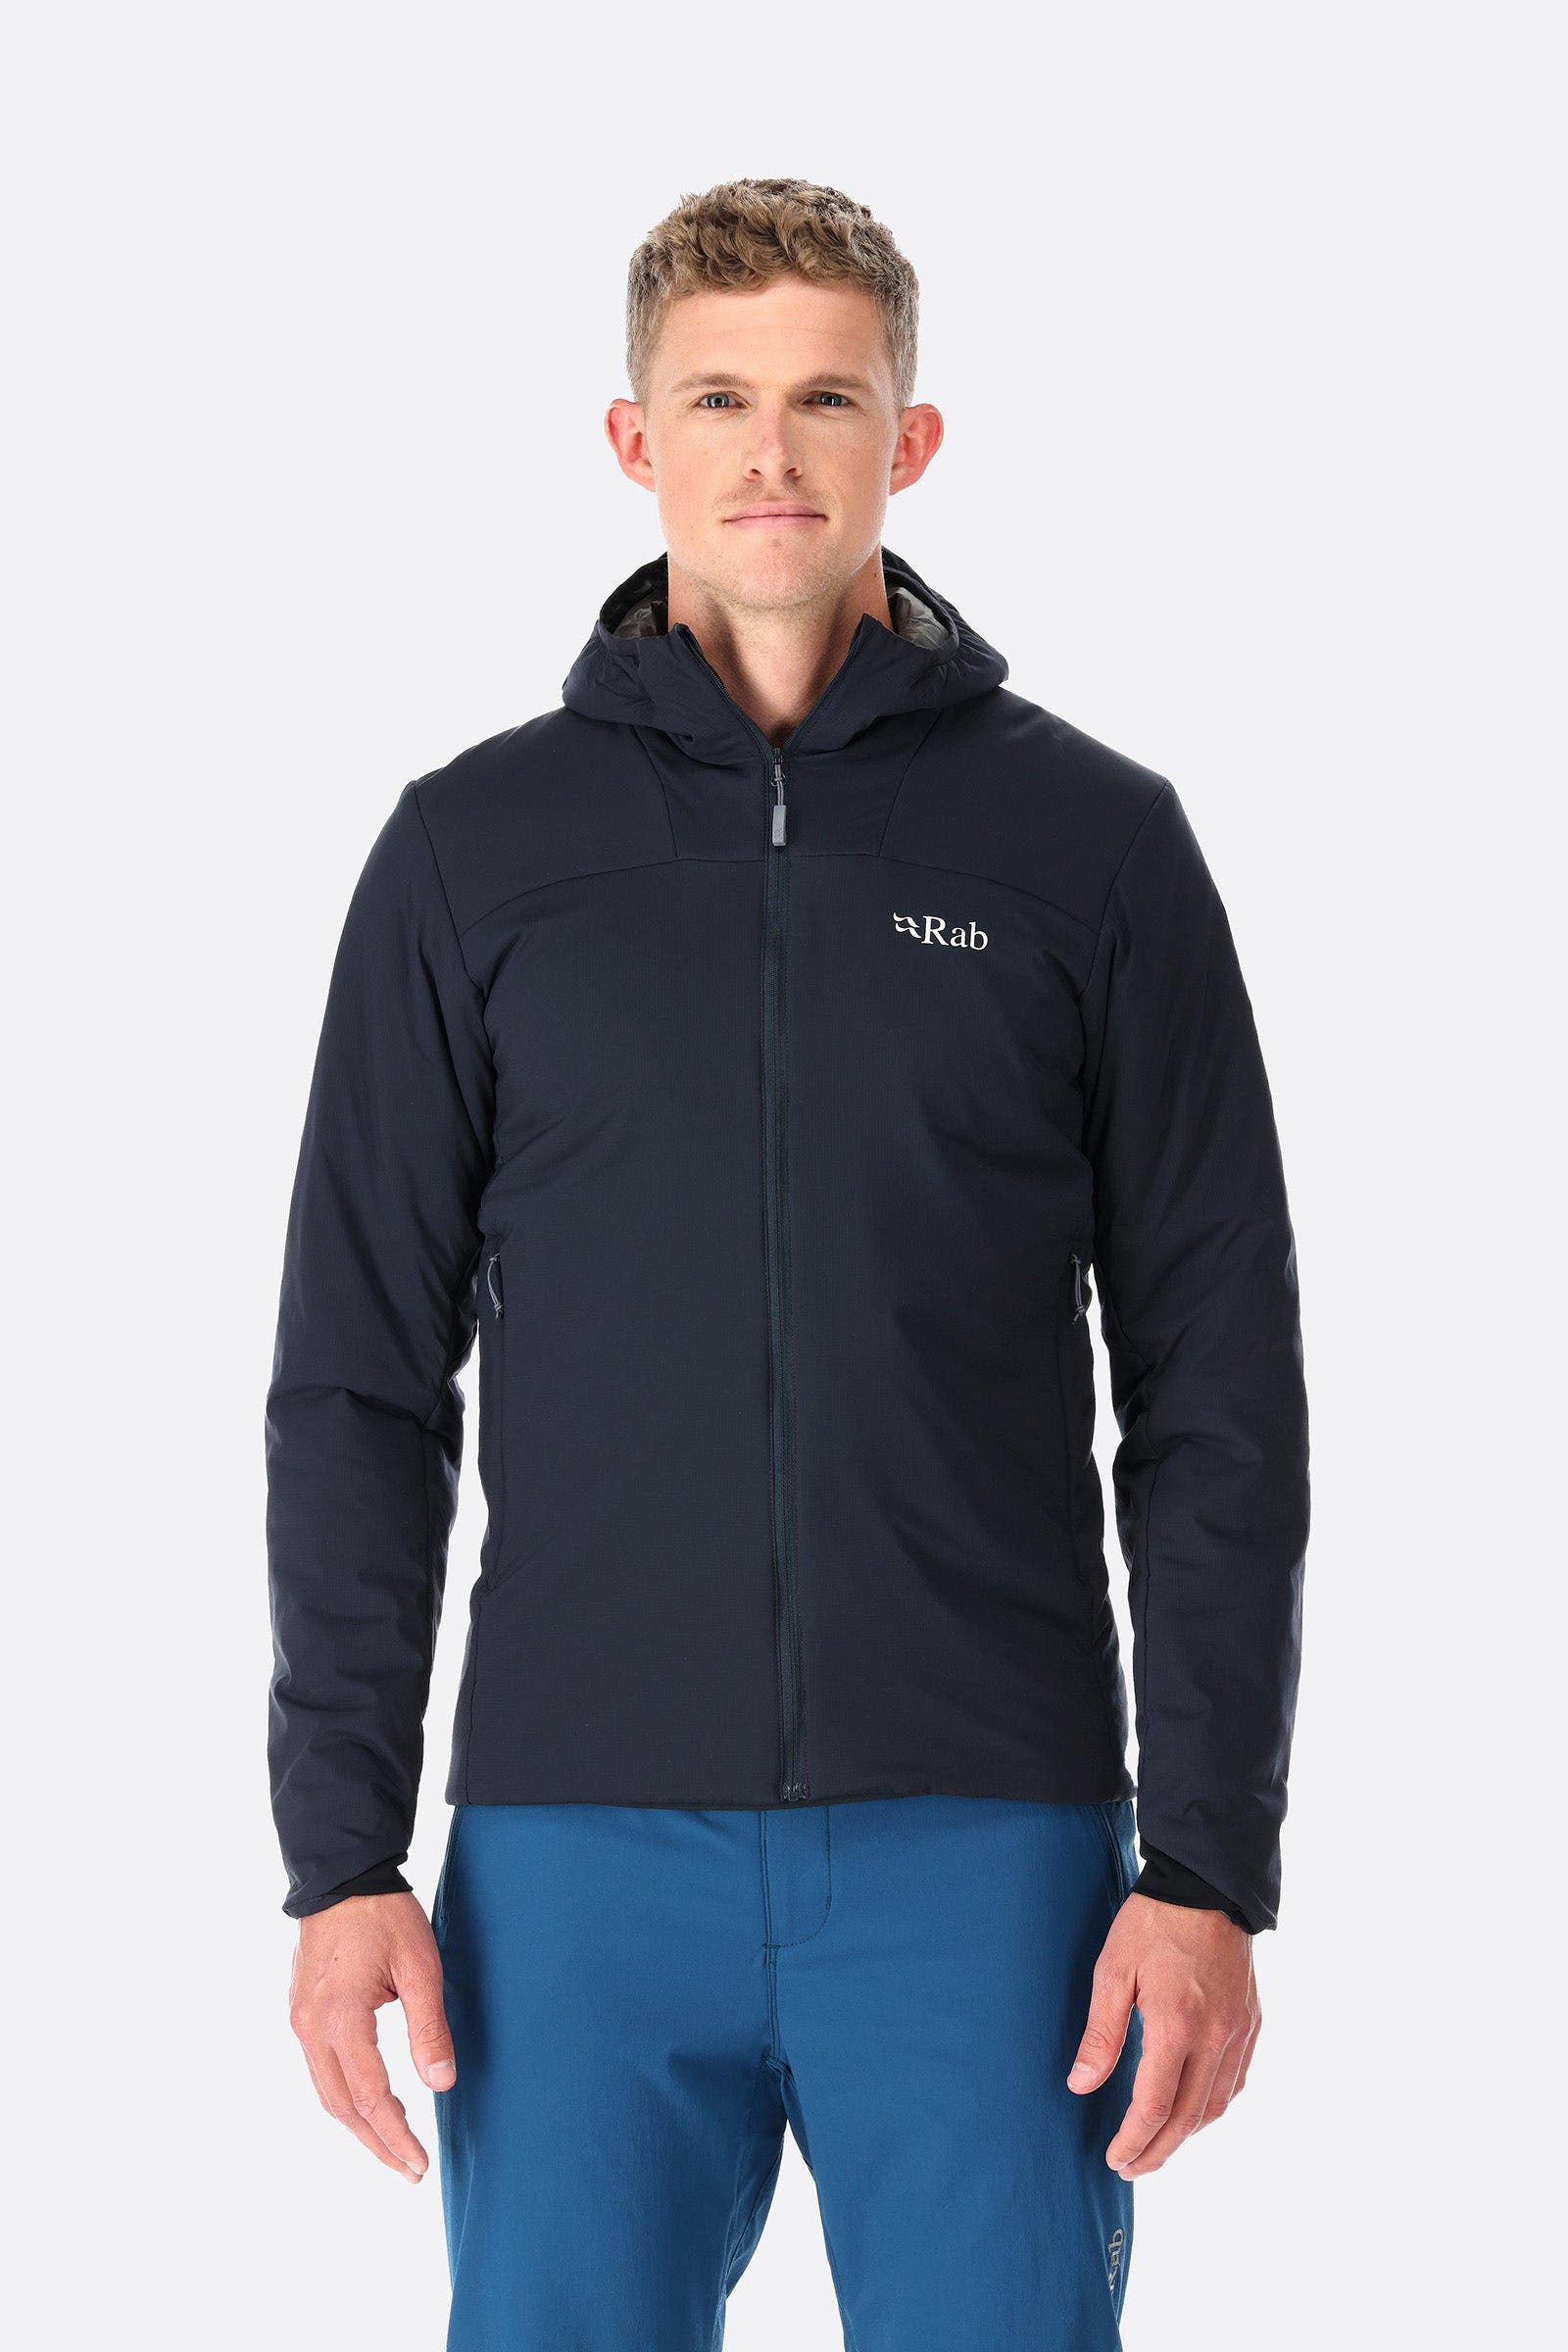 Rab Alpine Insulated Jacket Men's